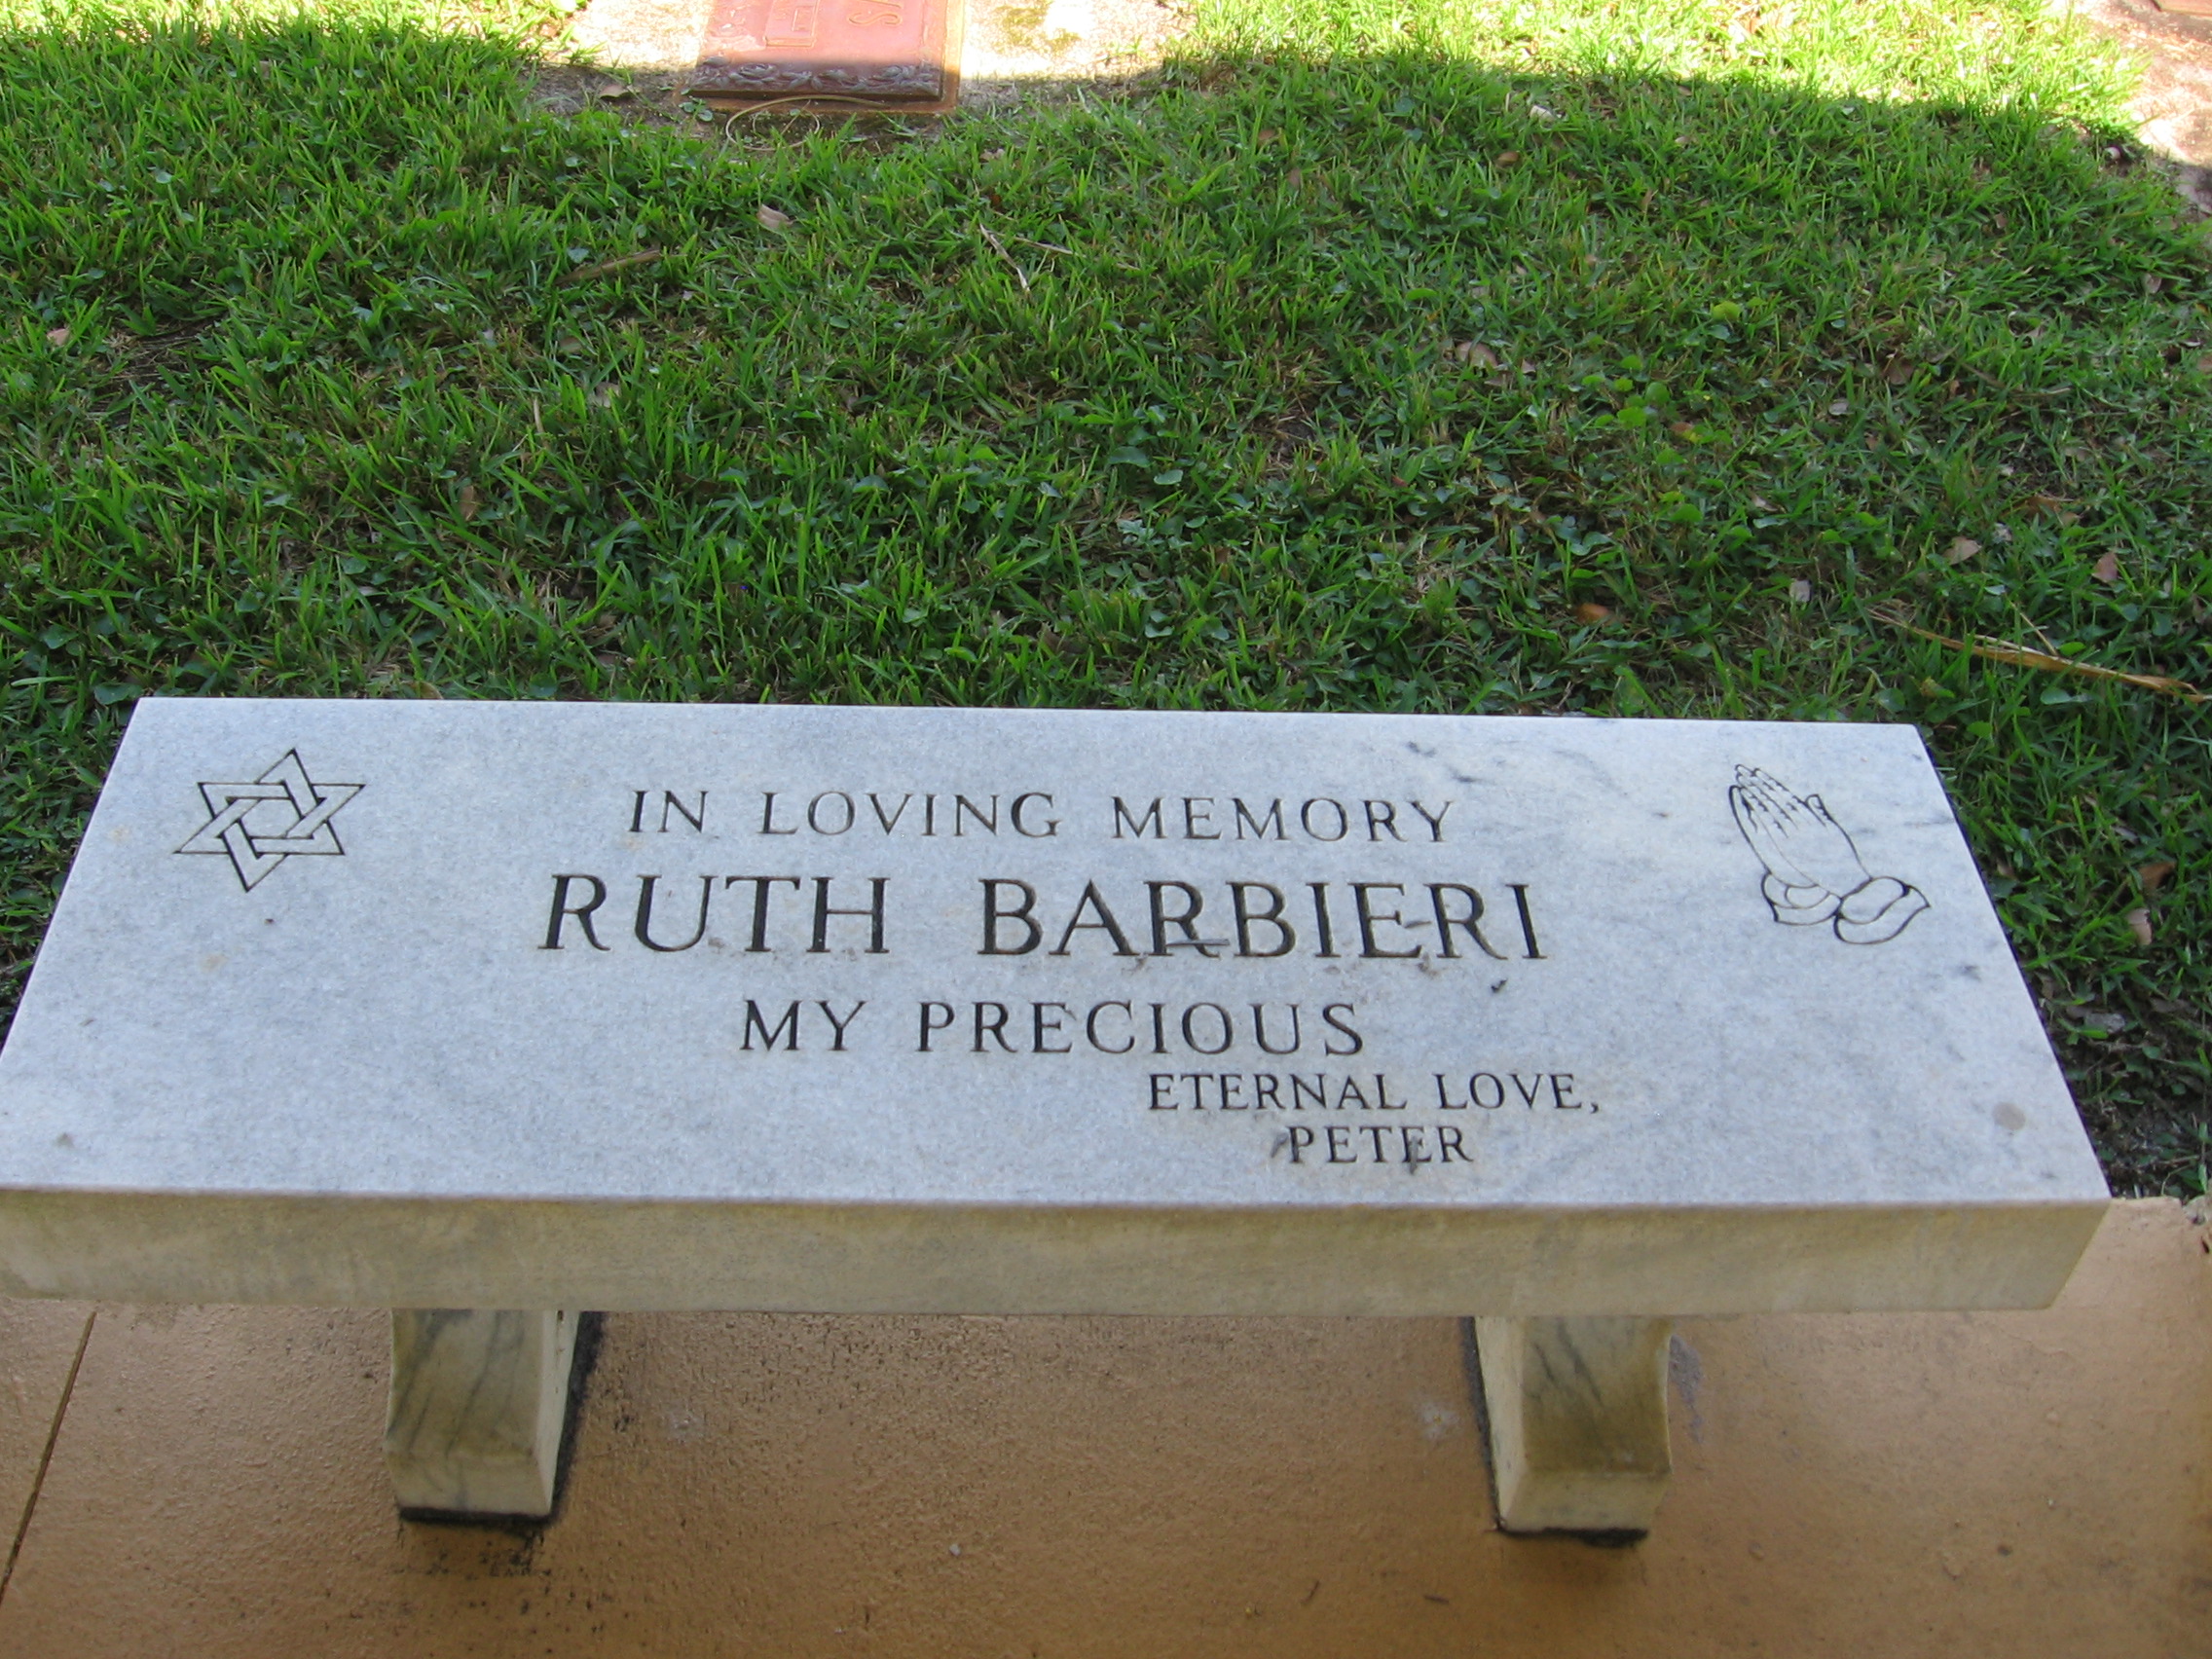 Ruth G Precious Barbieri